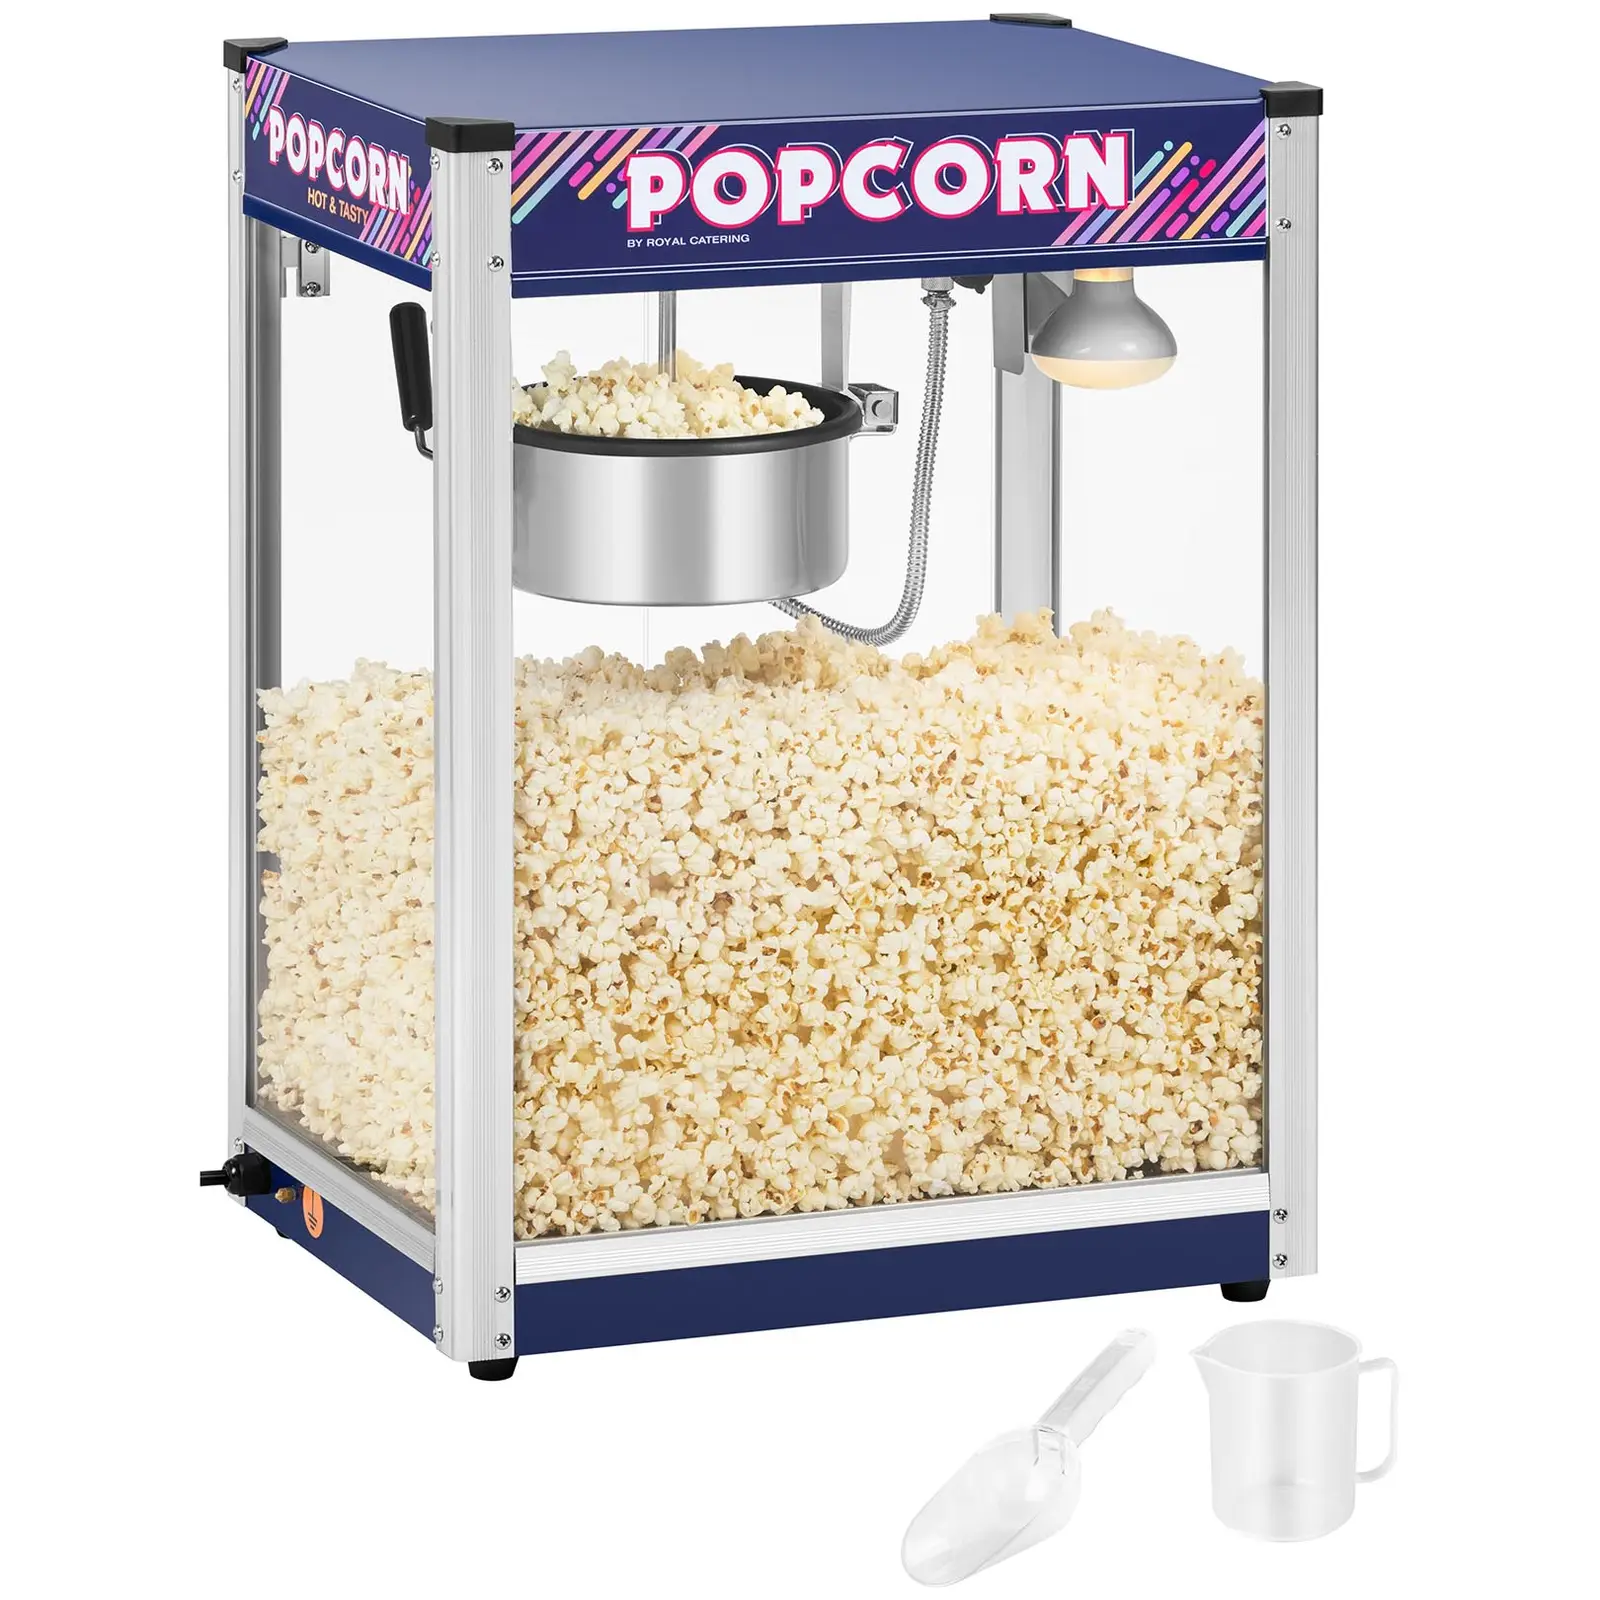 Popcornmaschine - blau - 8 oz